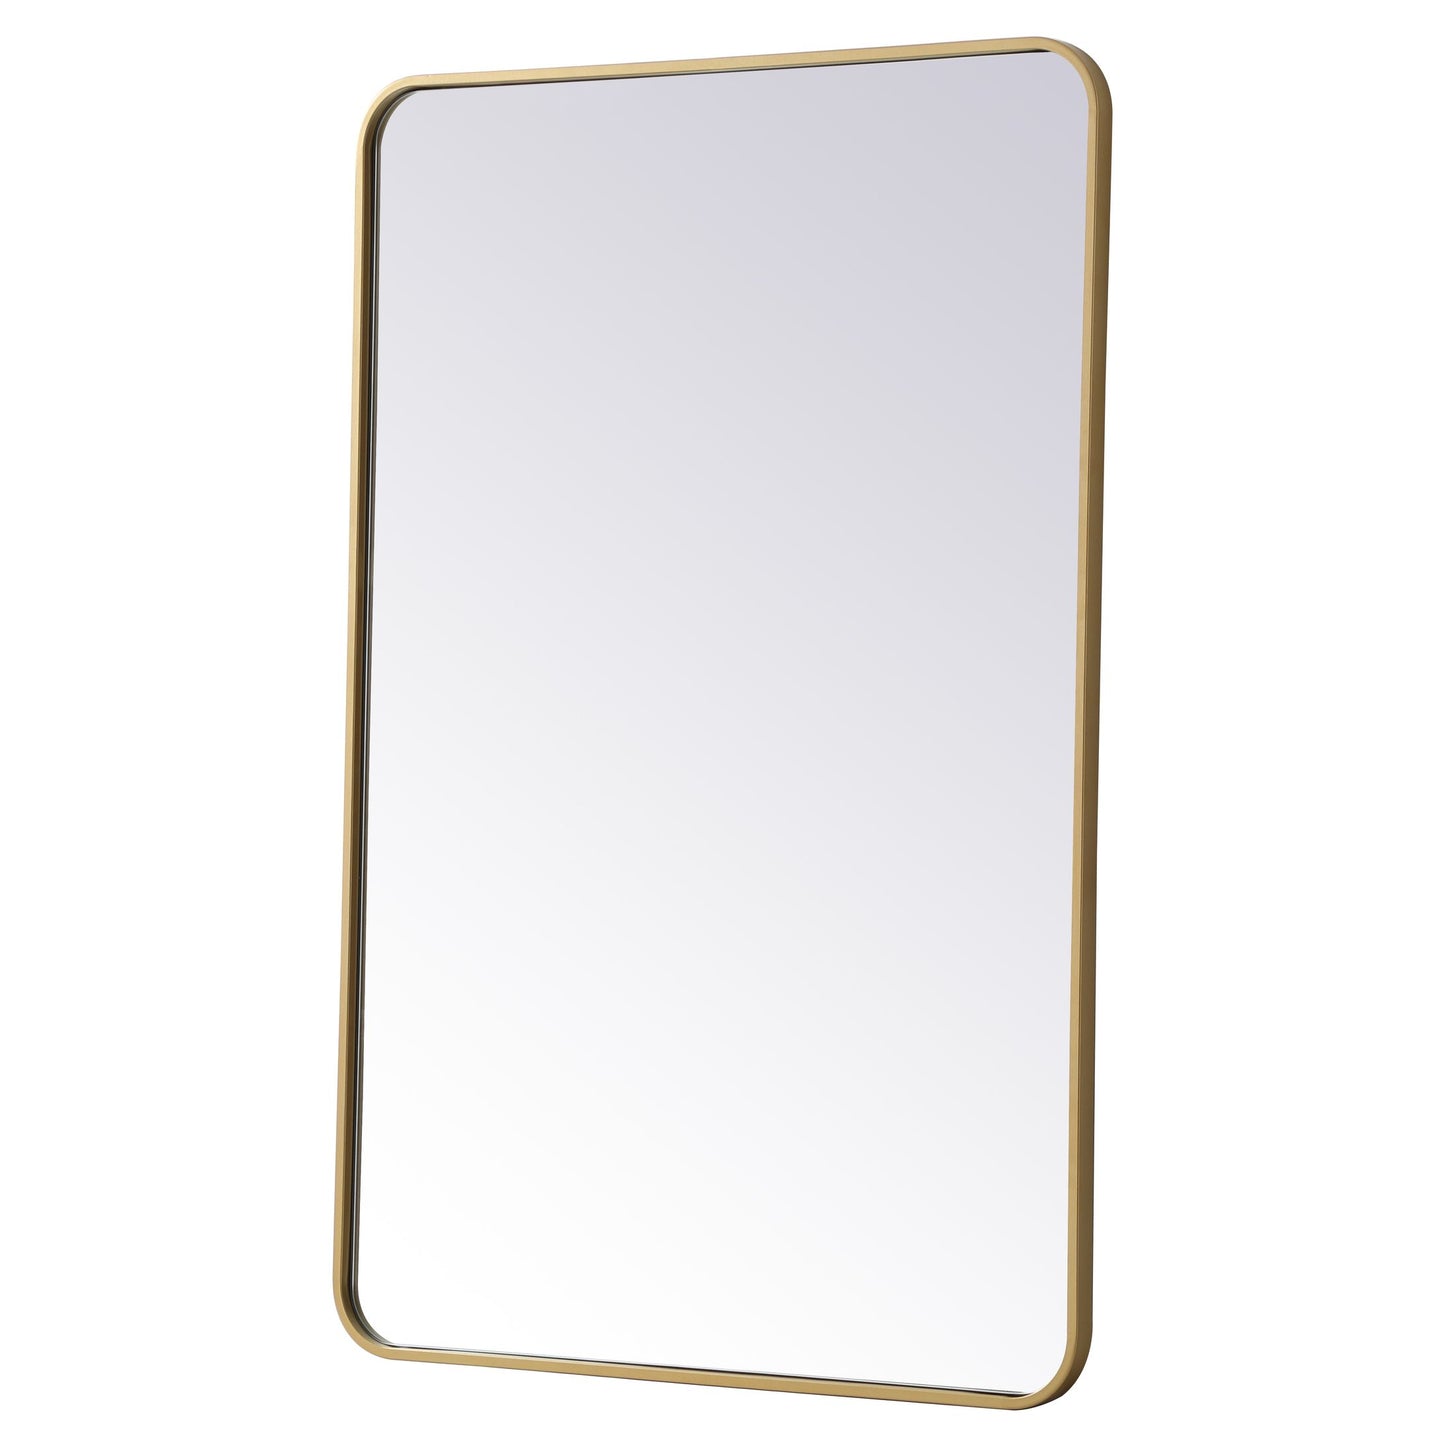 MR802842BR Evermore 28" x 42" Metal Framed Rectangular Mirror in Brass